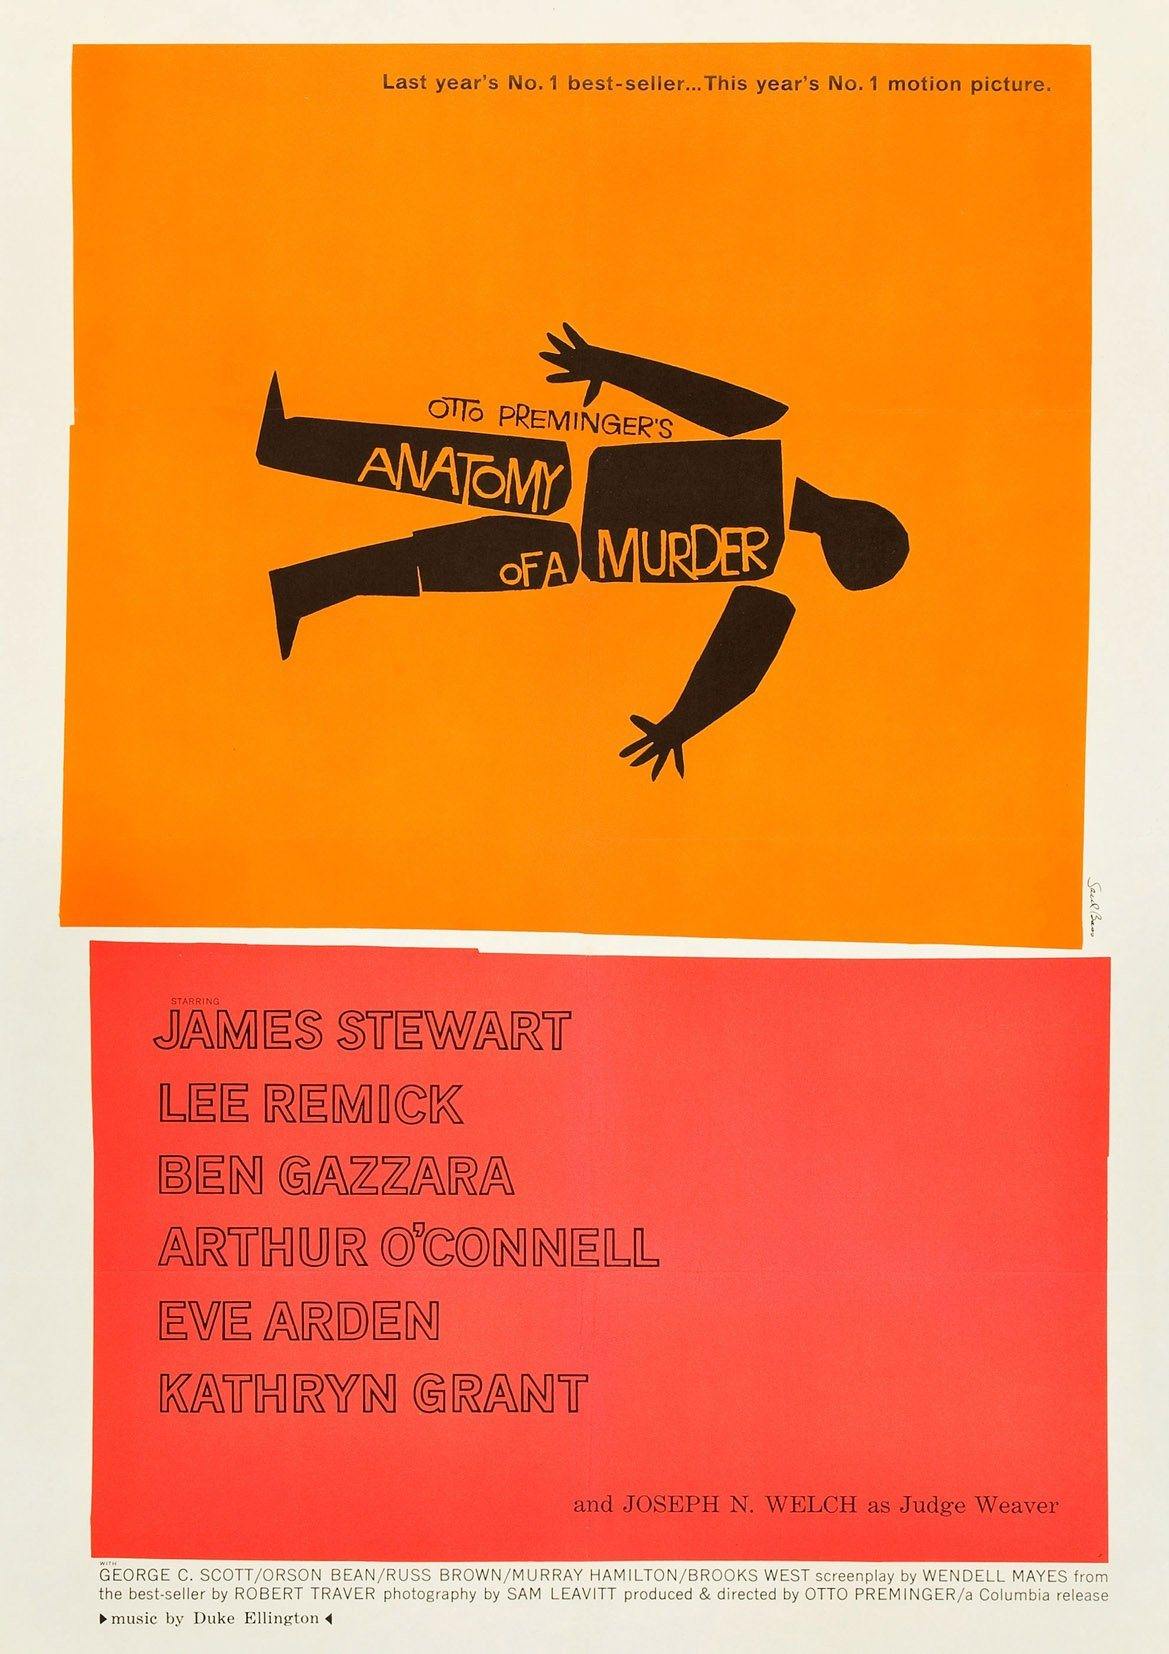 ANATOMY OF A MURDER: Movie Poster Reprint - Pimlico Prints